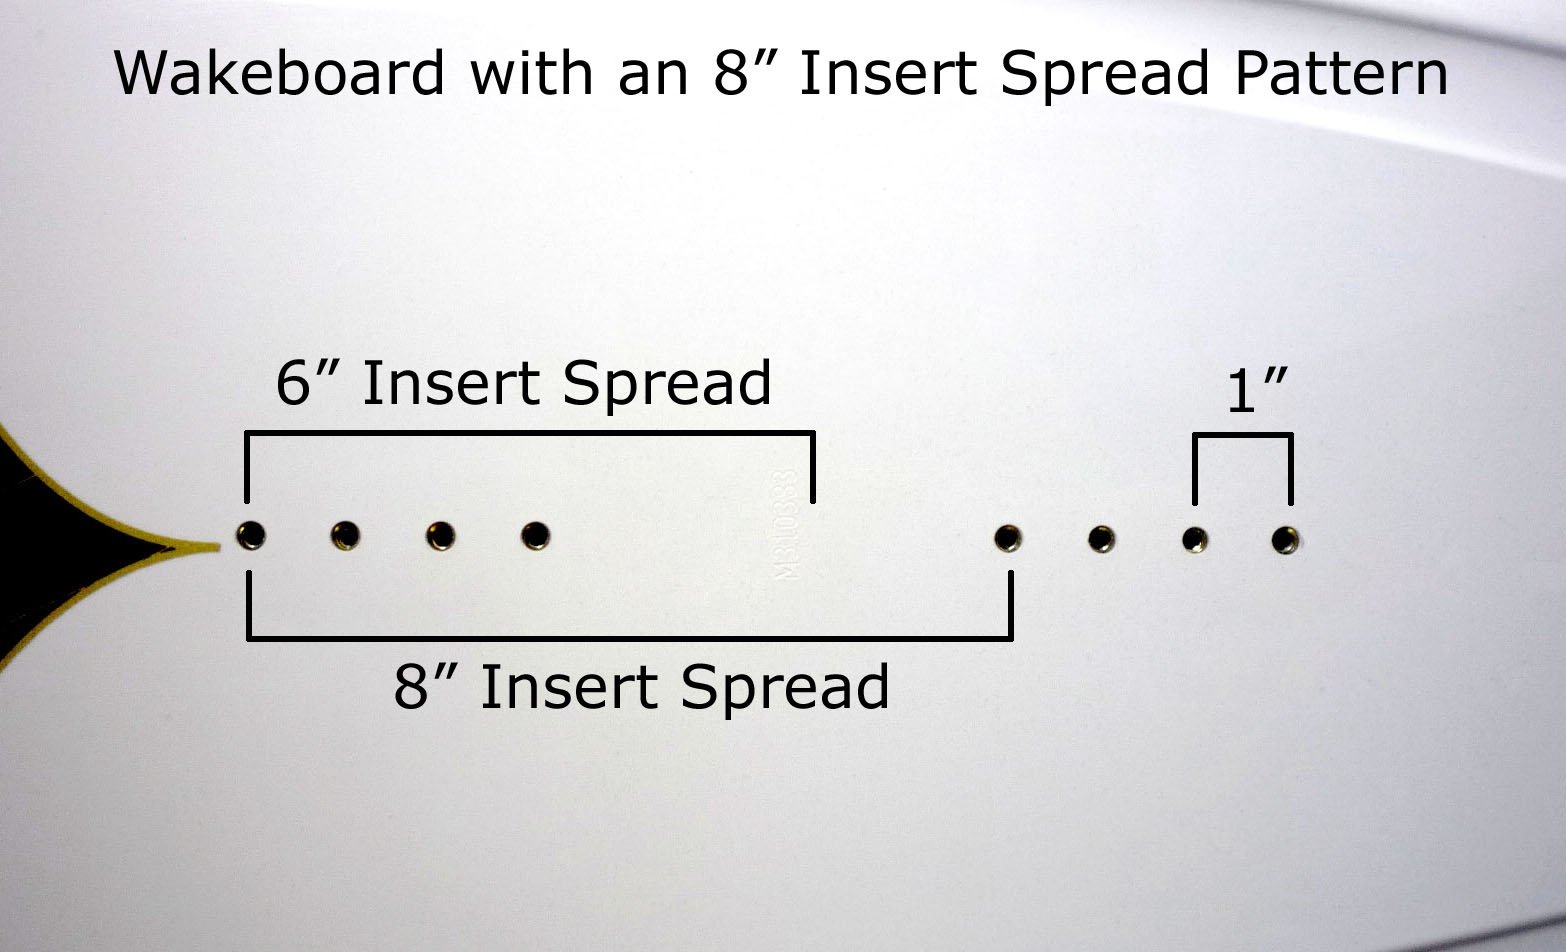 Cwb Wakeboard Size Chart